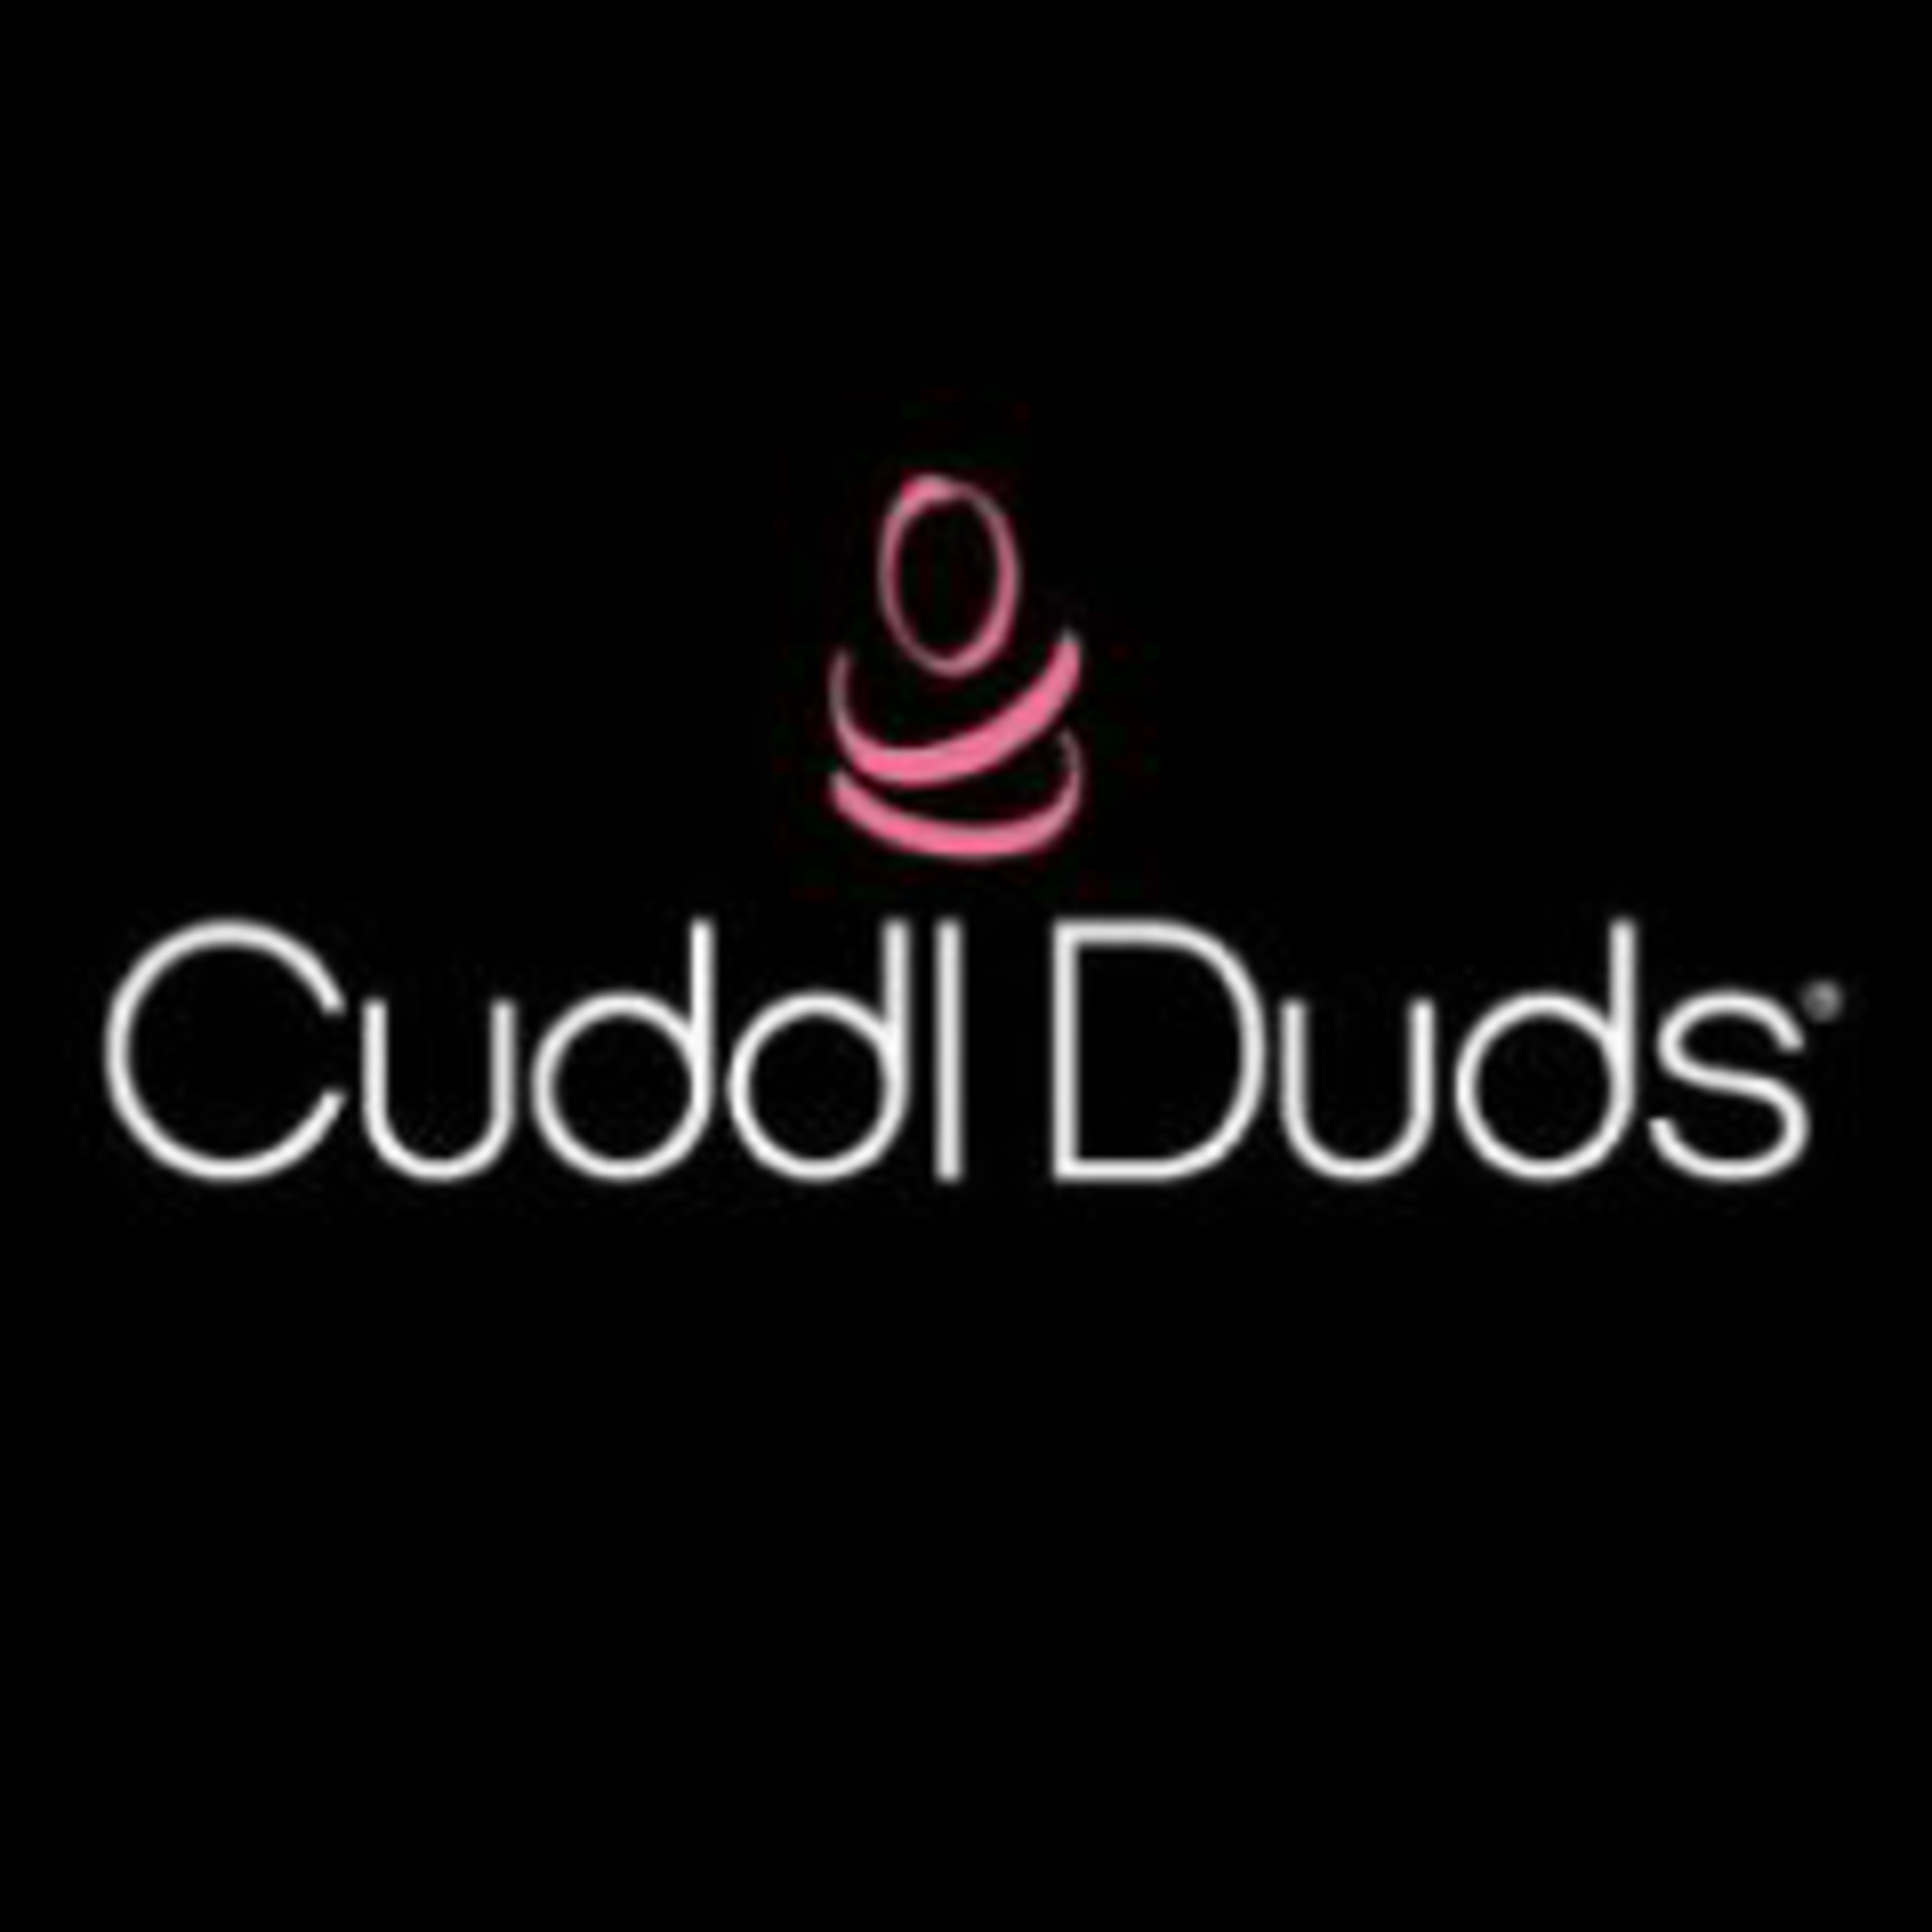 CuddlDudsCode